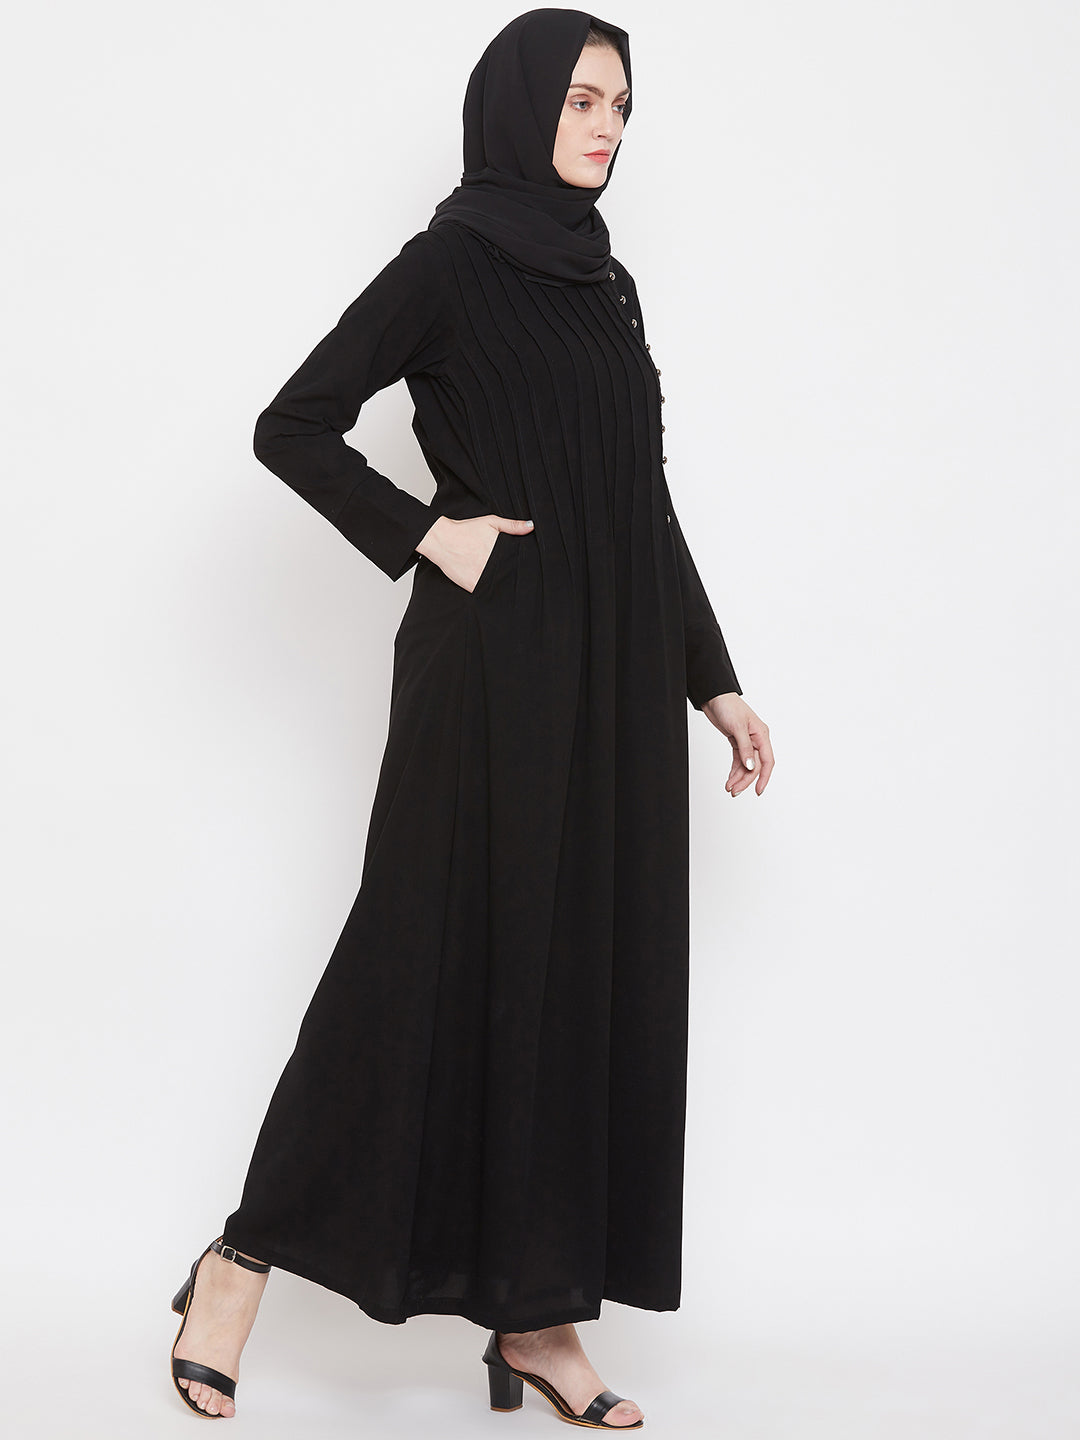 Nabia Women Black Solid Side Plate Abaya Dress With Georgette Scarf